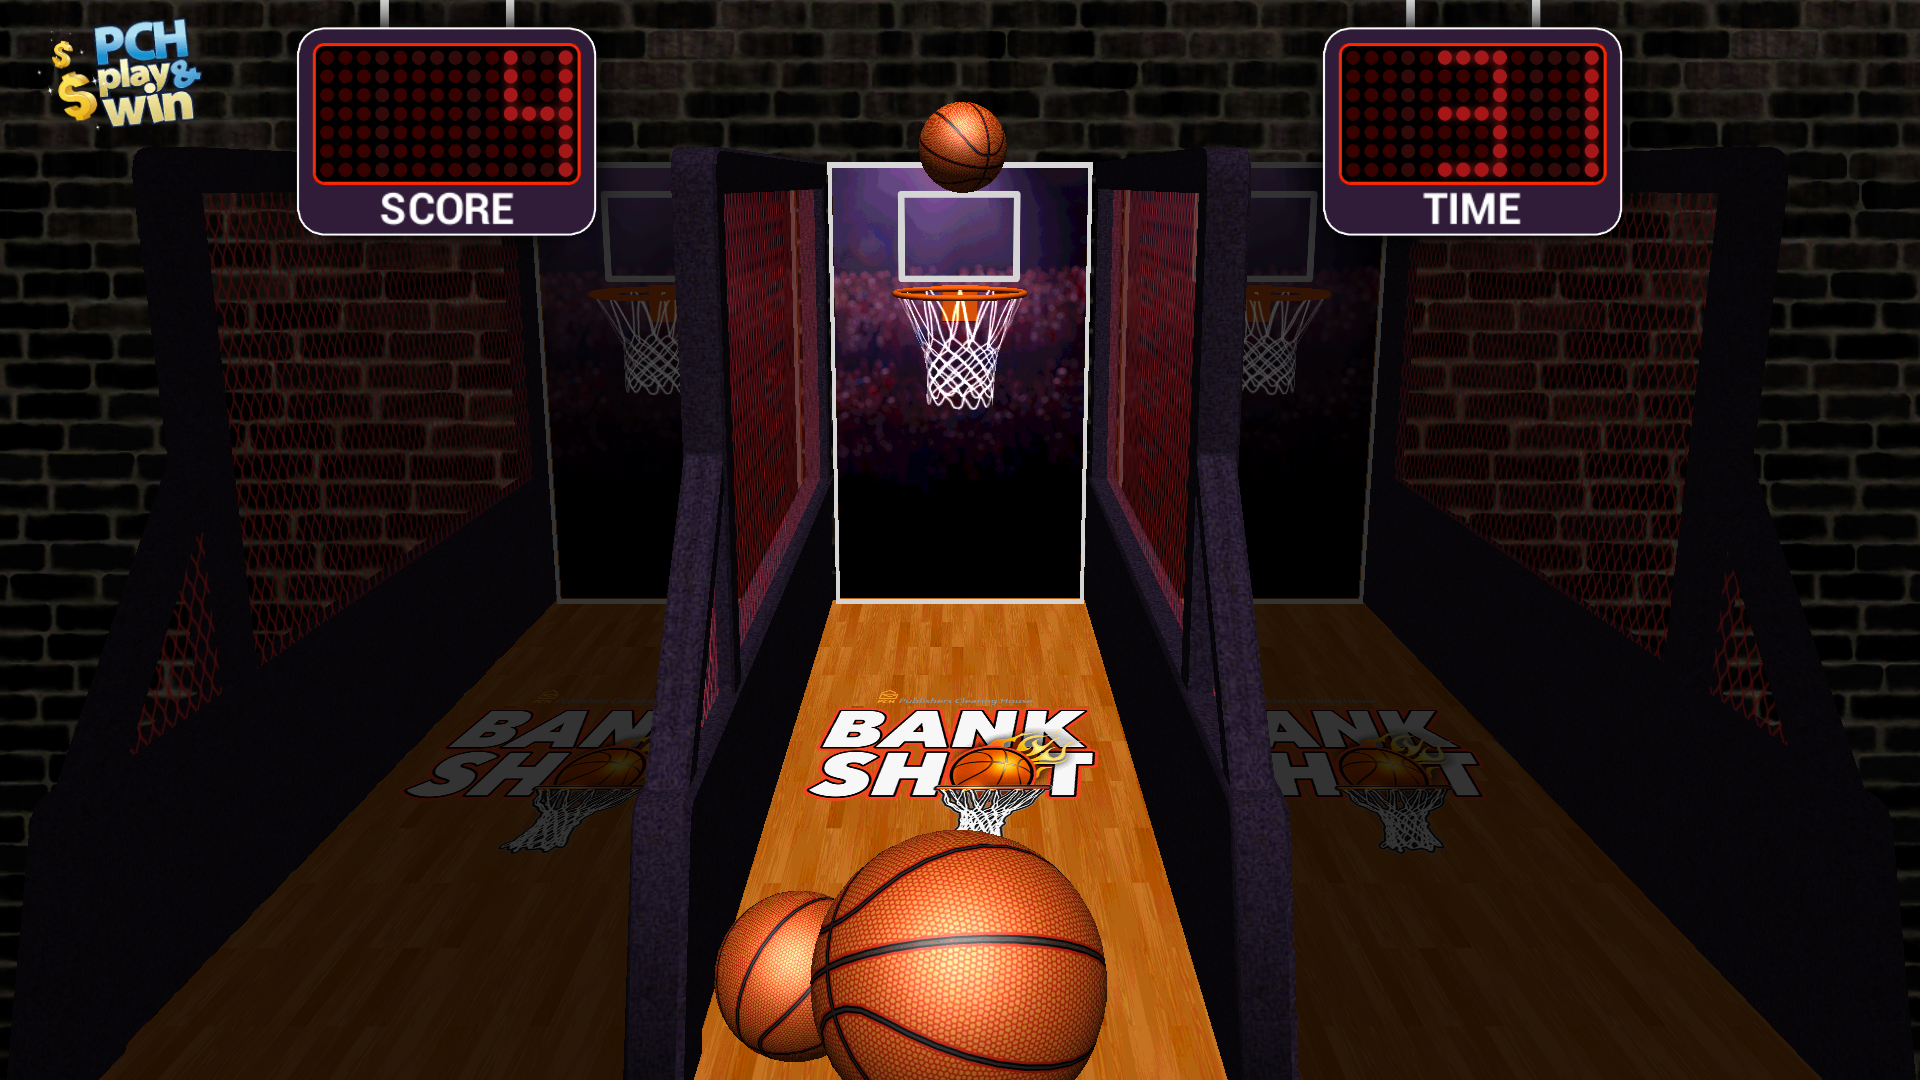 Play&Win App_Bank Shot Game